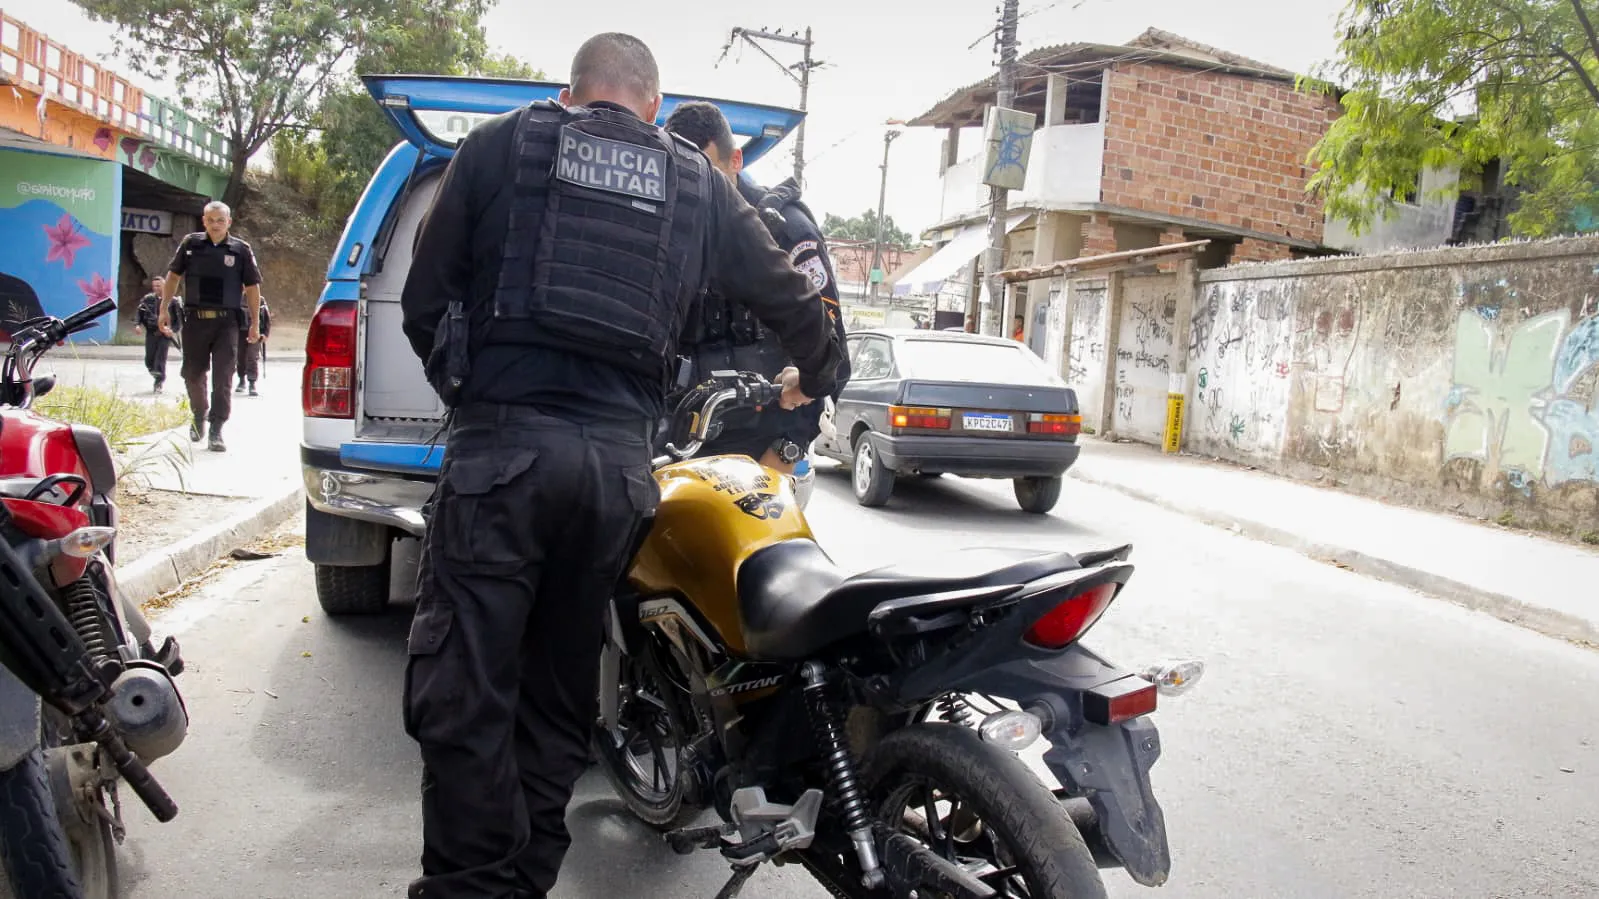 Policial conduz moto aprendida no local